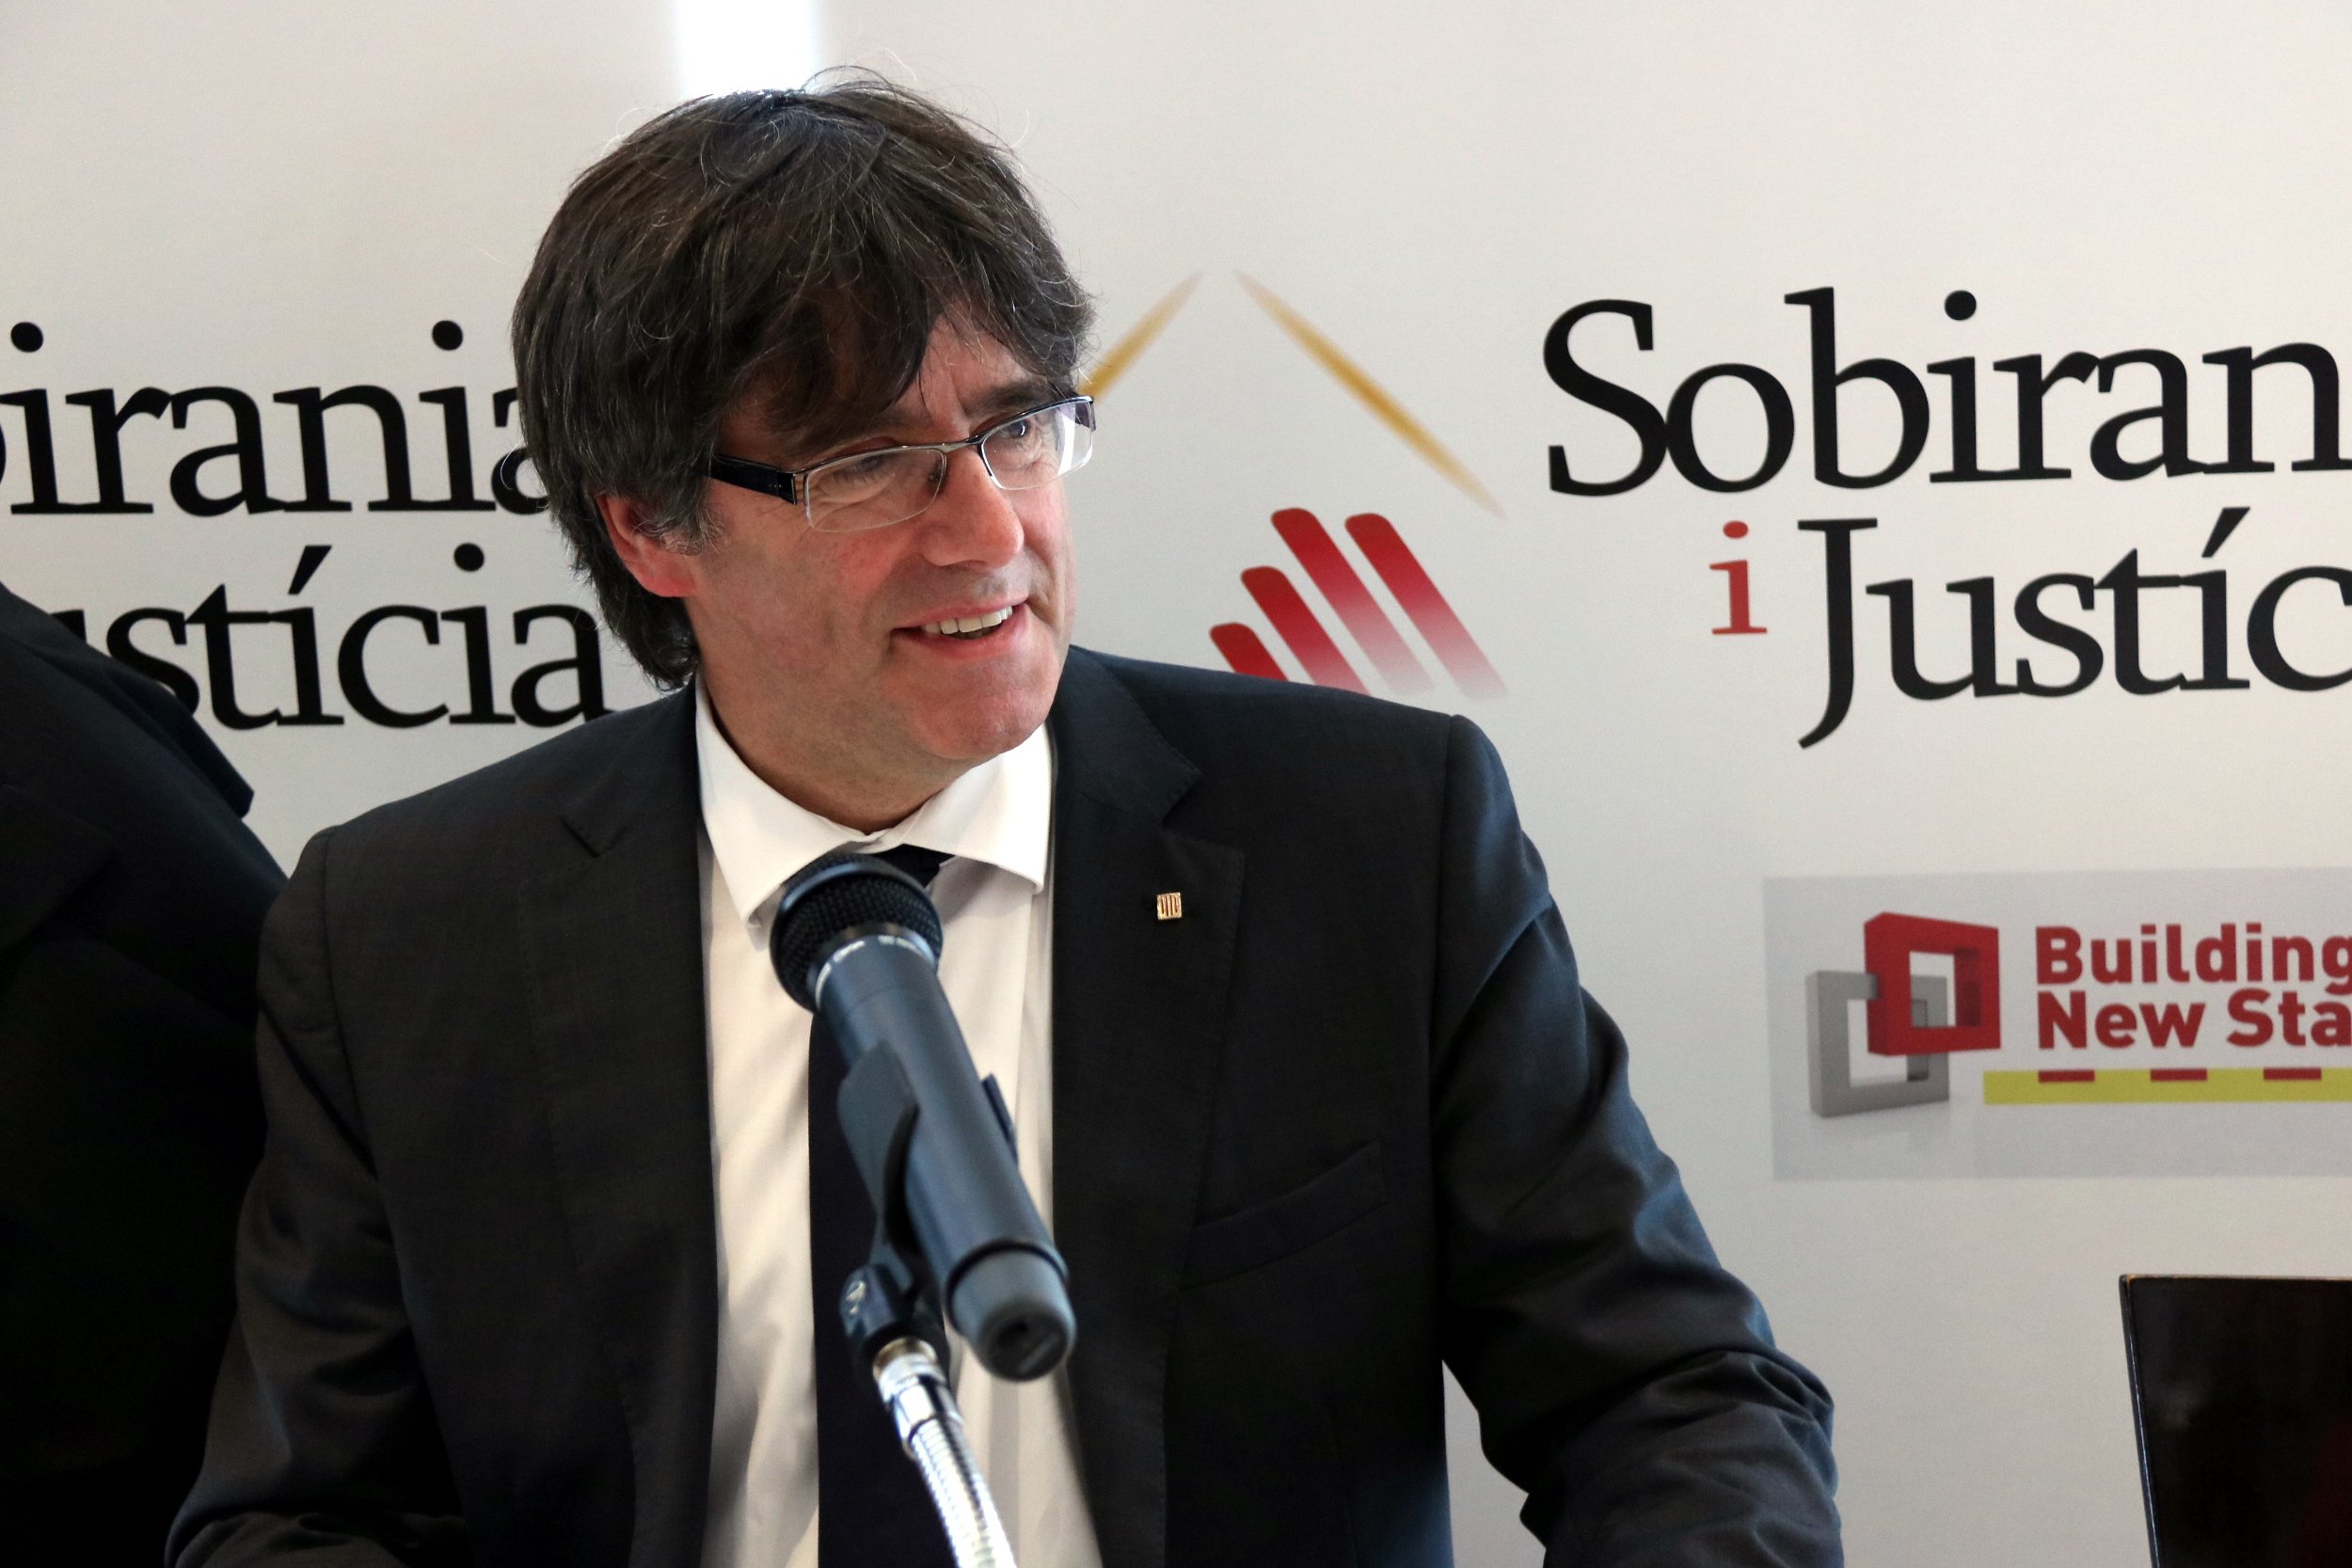 Puigdemont desafía a Rajoy a negociar: "No hay tanto poder para parar tanta democracia"